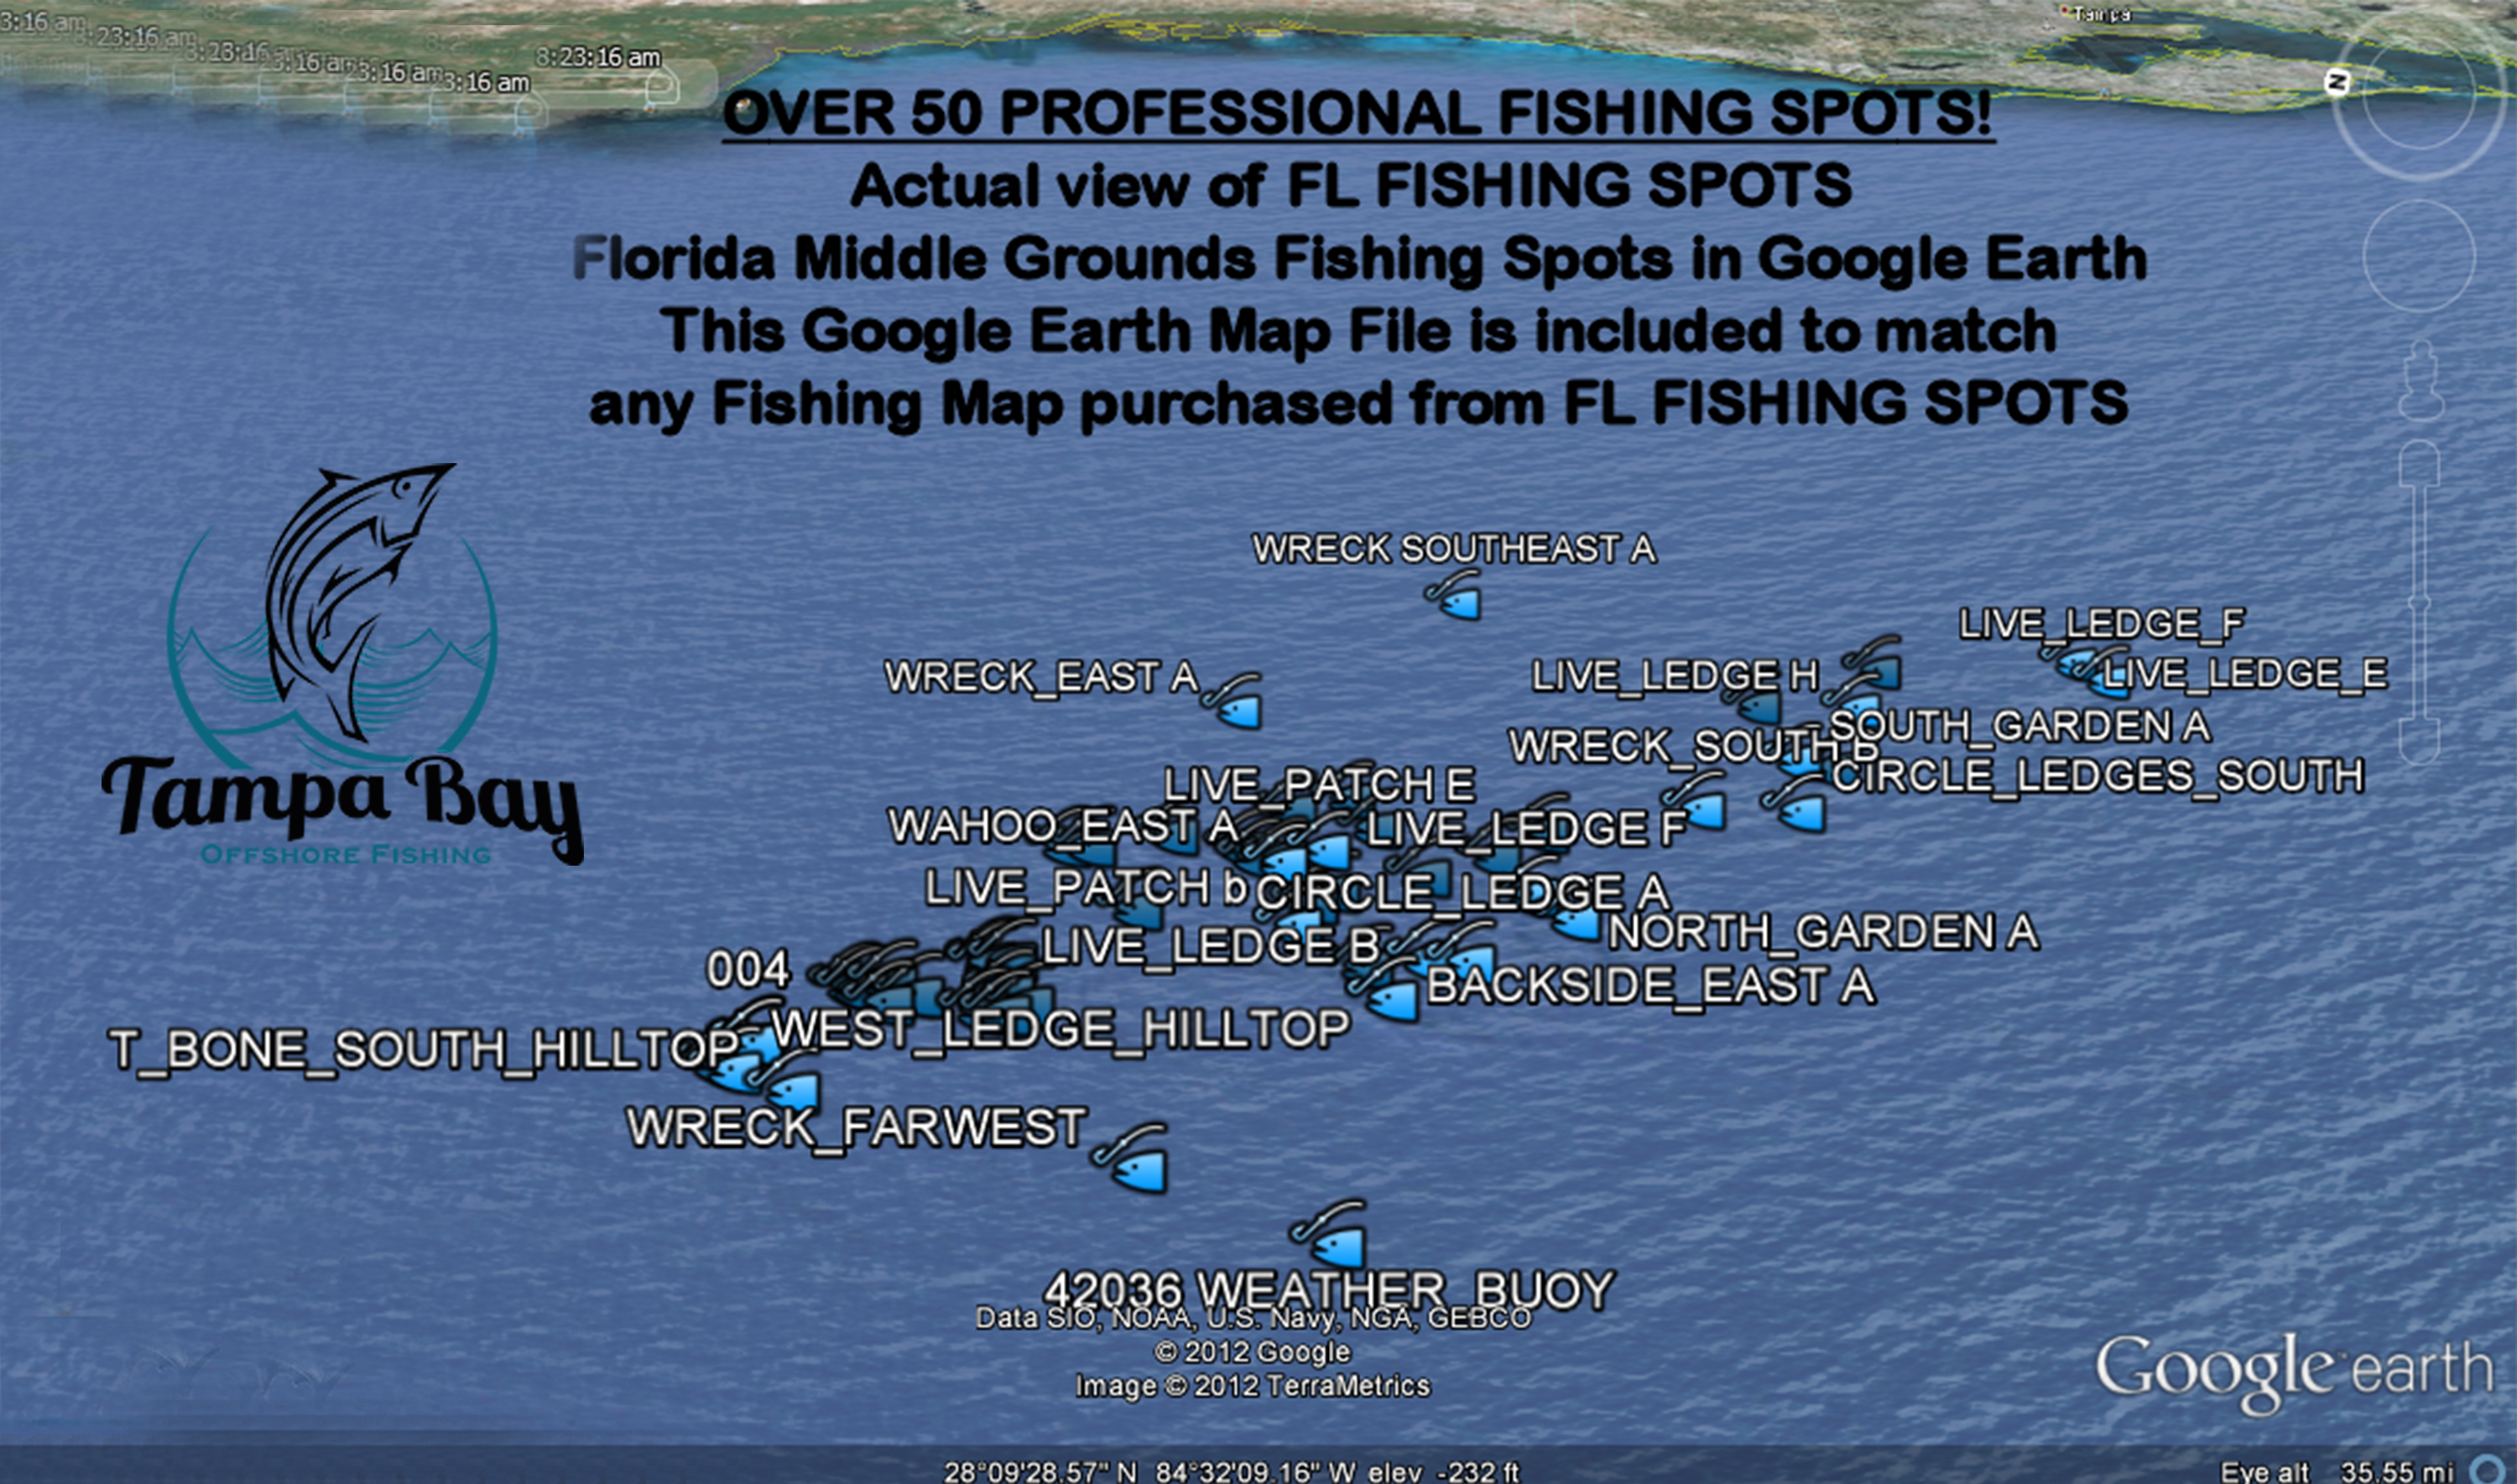 Florida middlegrounds charter fishing trips